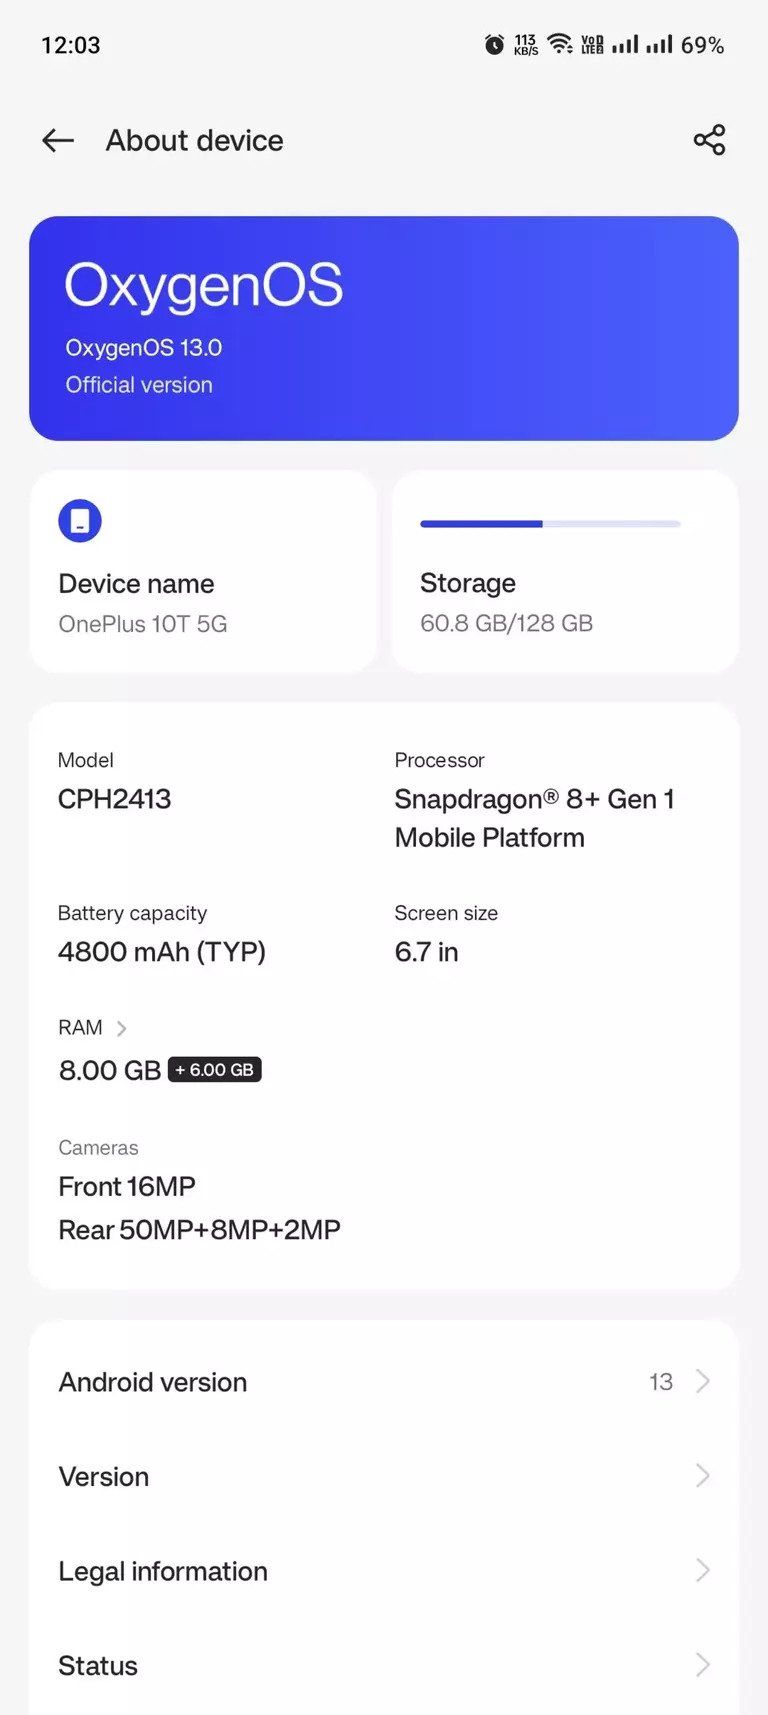 OnePlus 10T OxygenOS 13 details